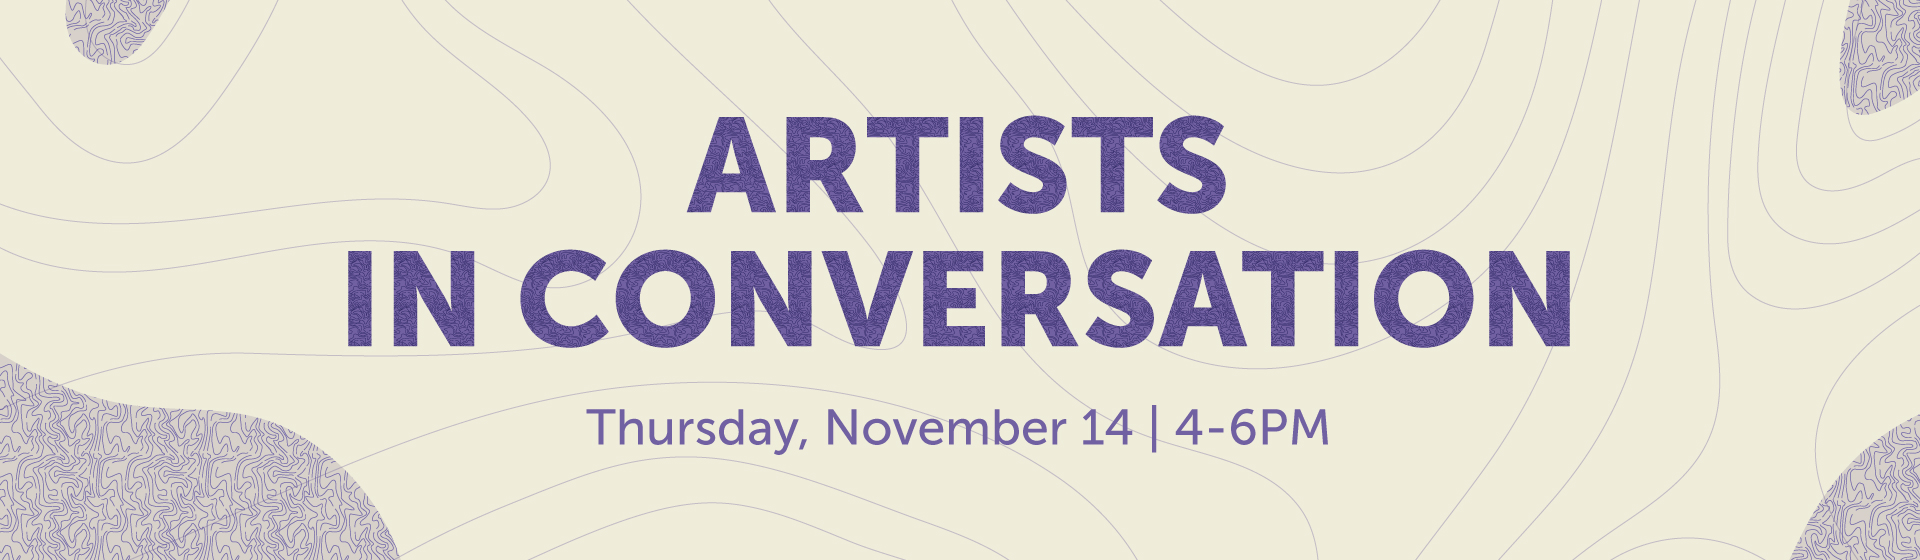 Artists in Conversation